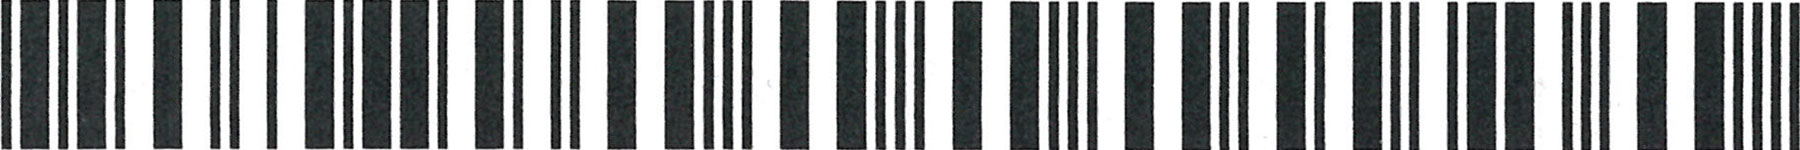 Image of correct barcode